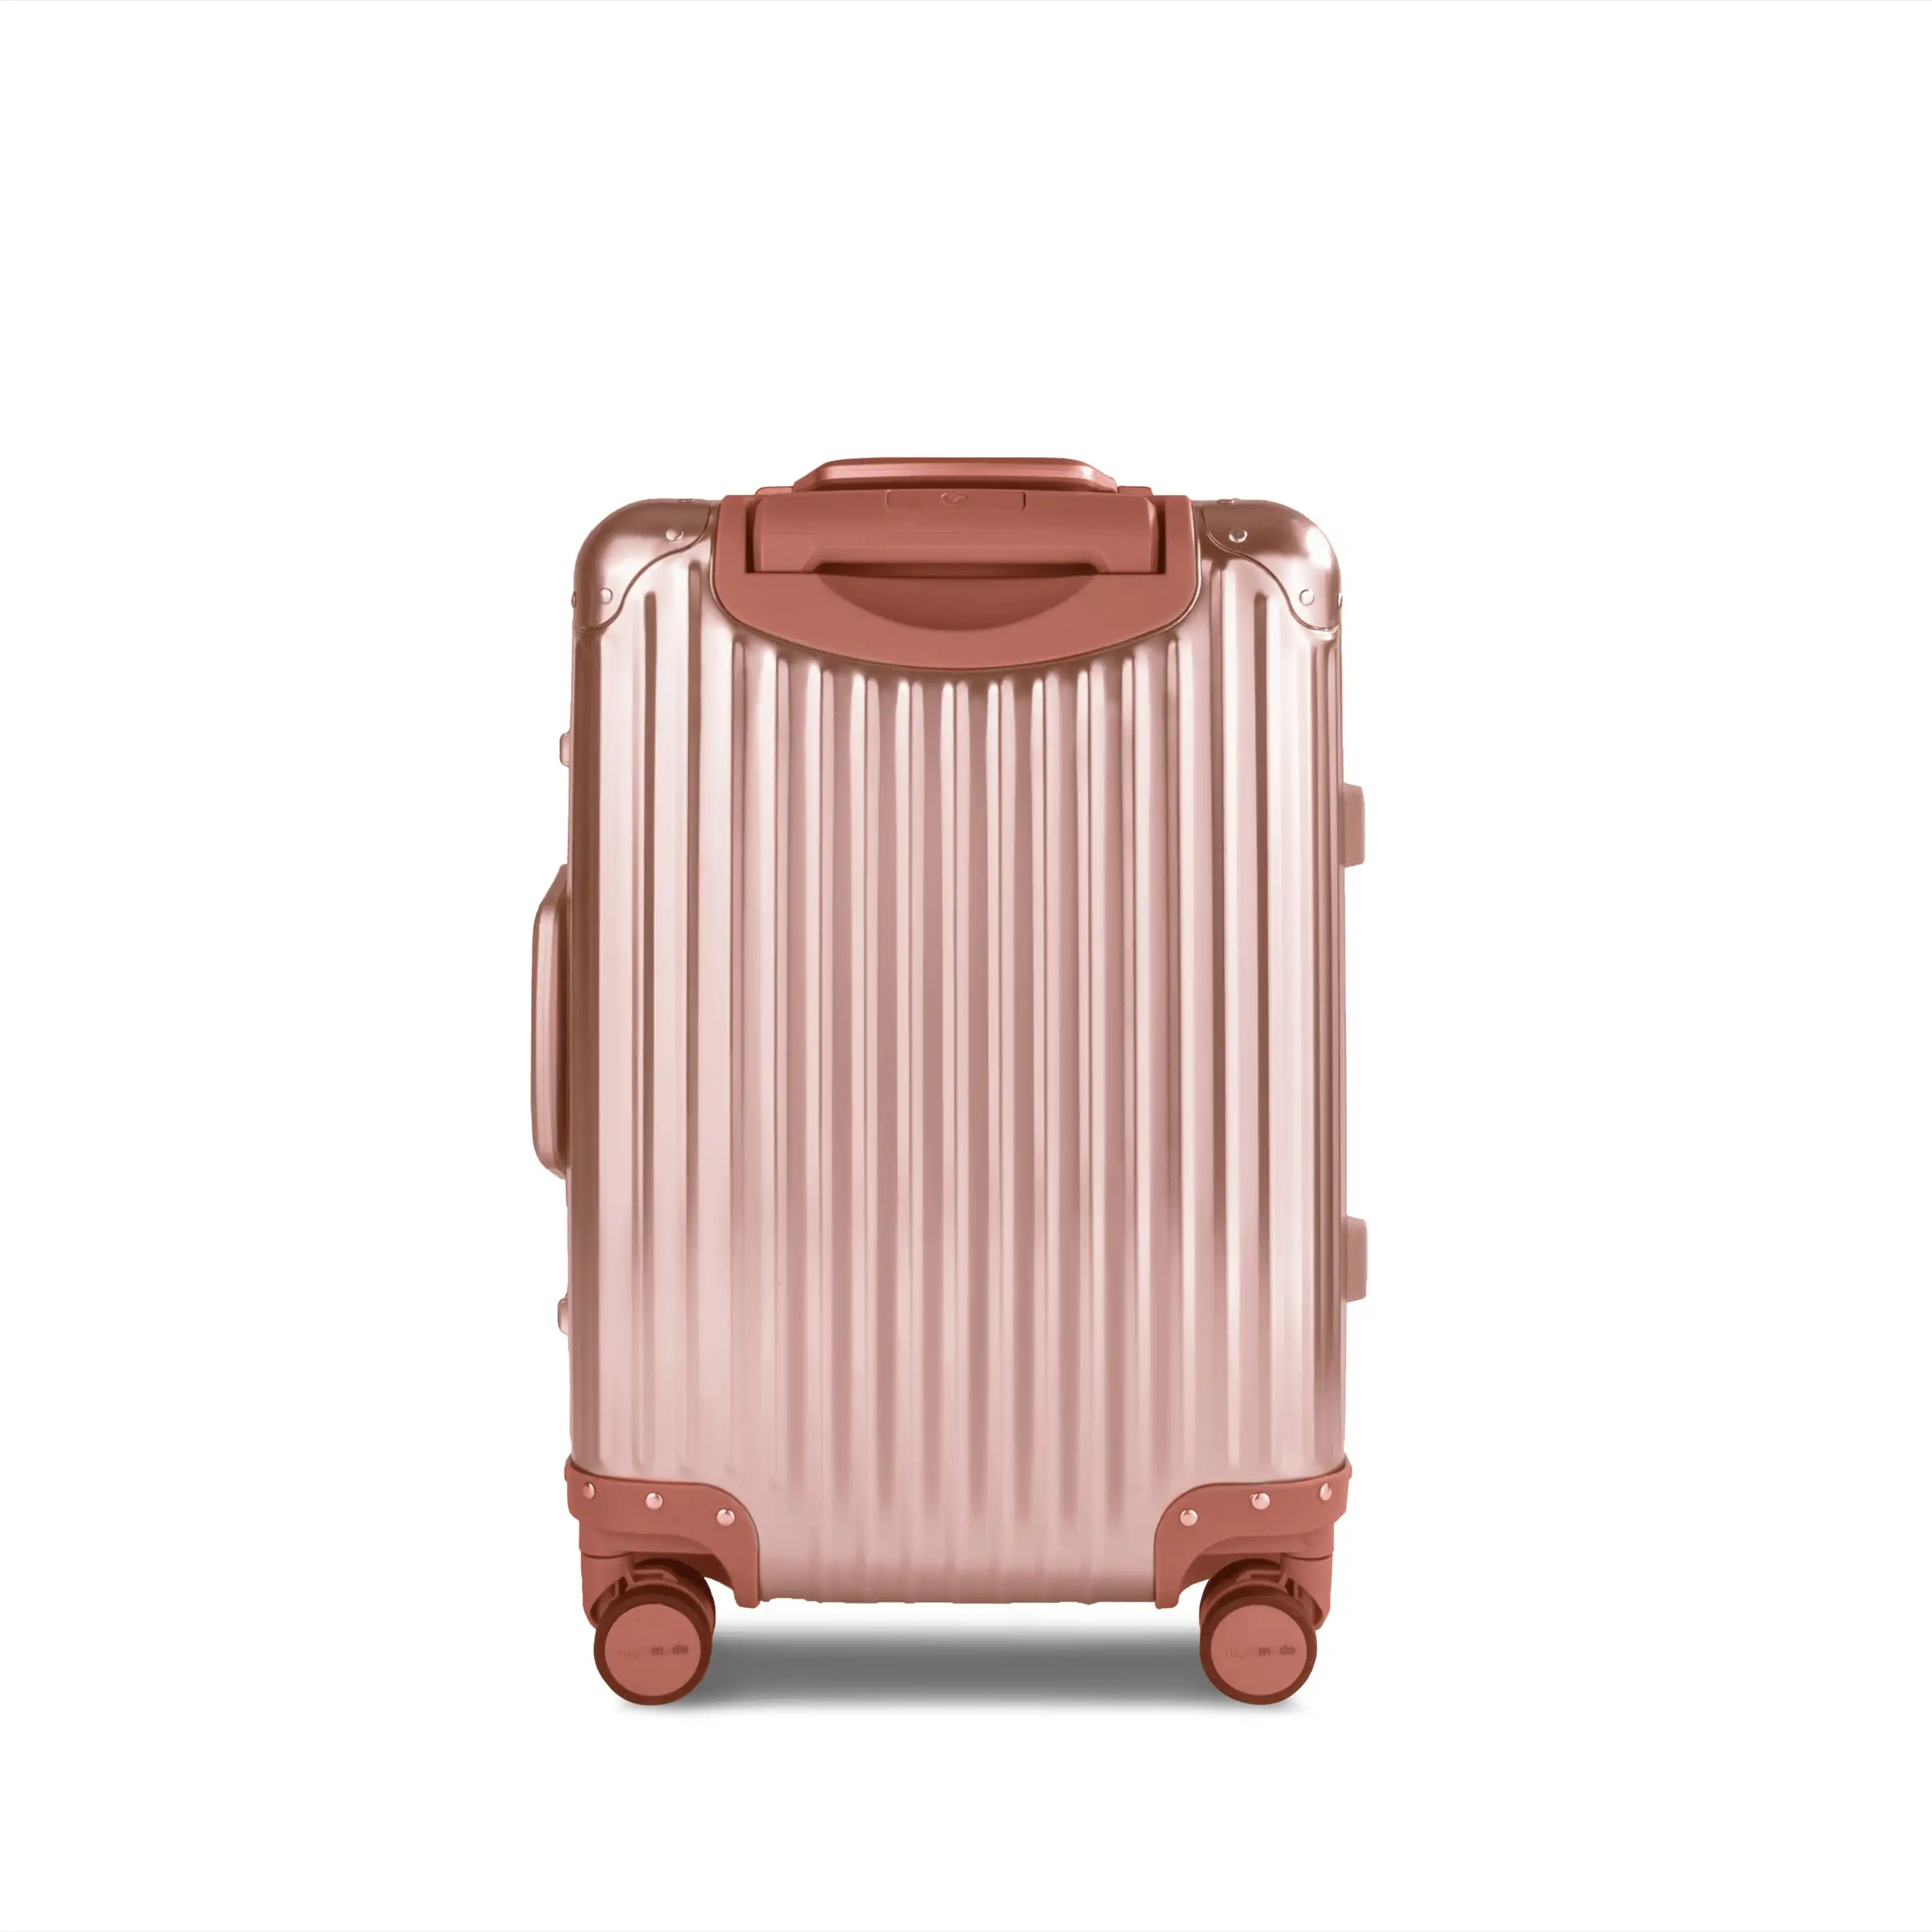 Flightmode Travel Suitcase Large-Rose Gold